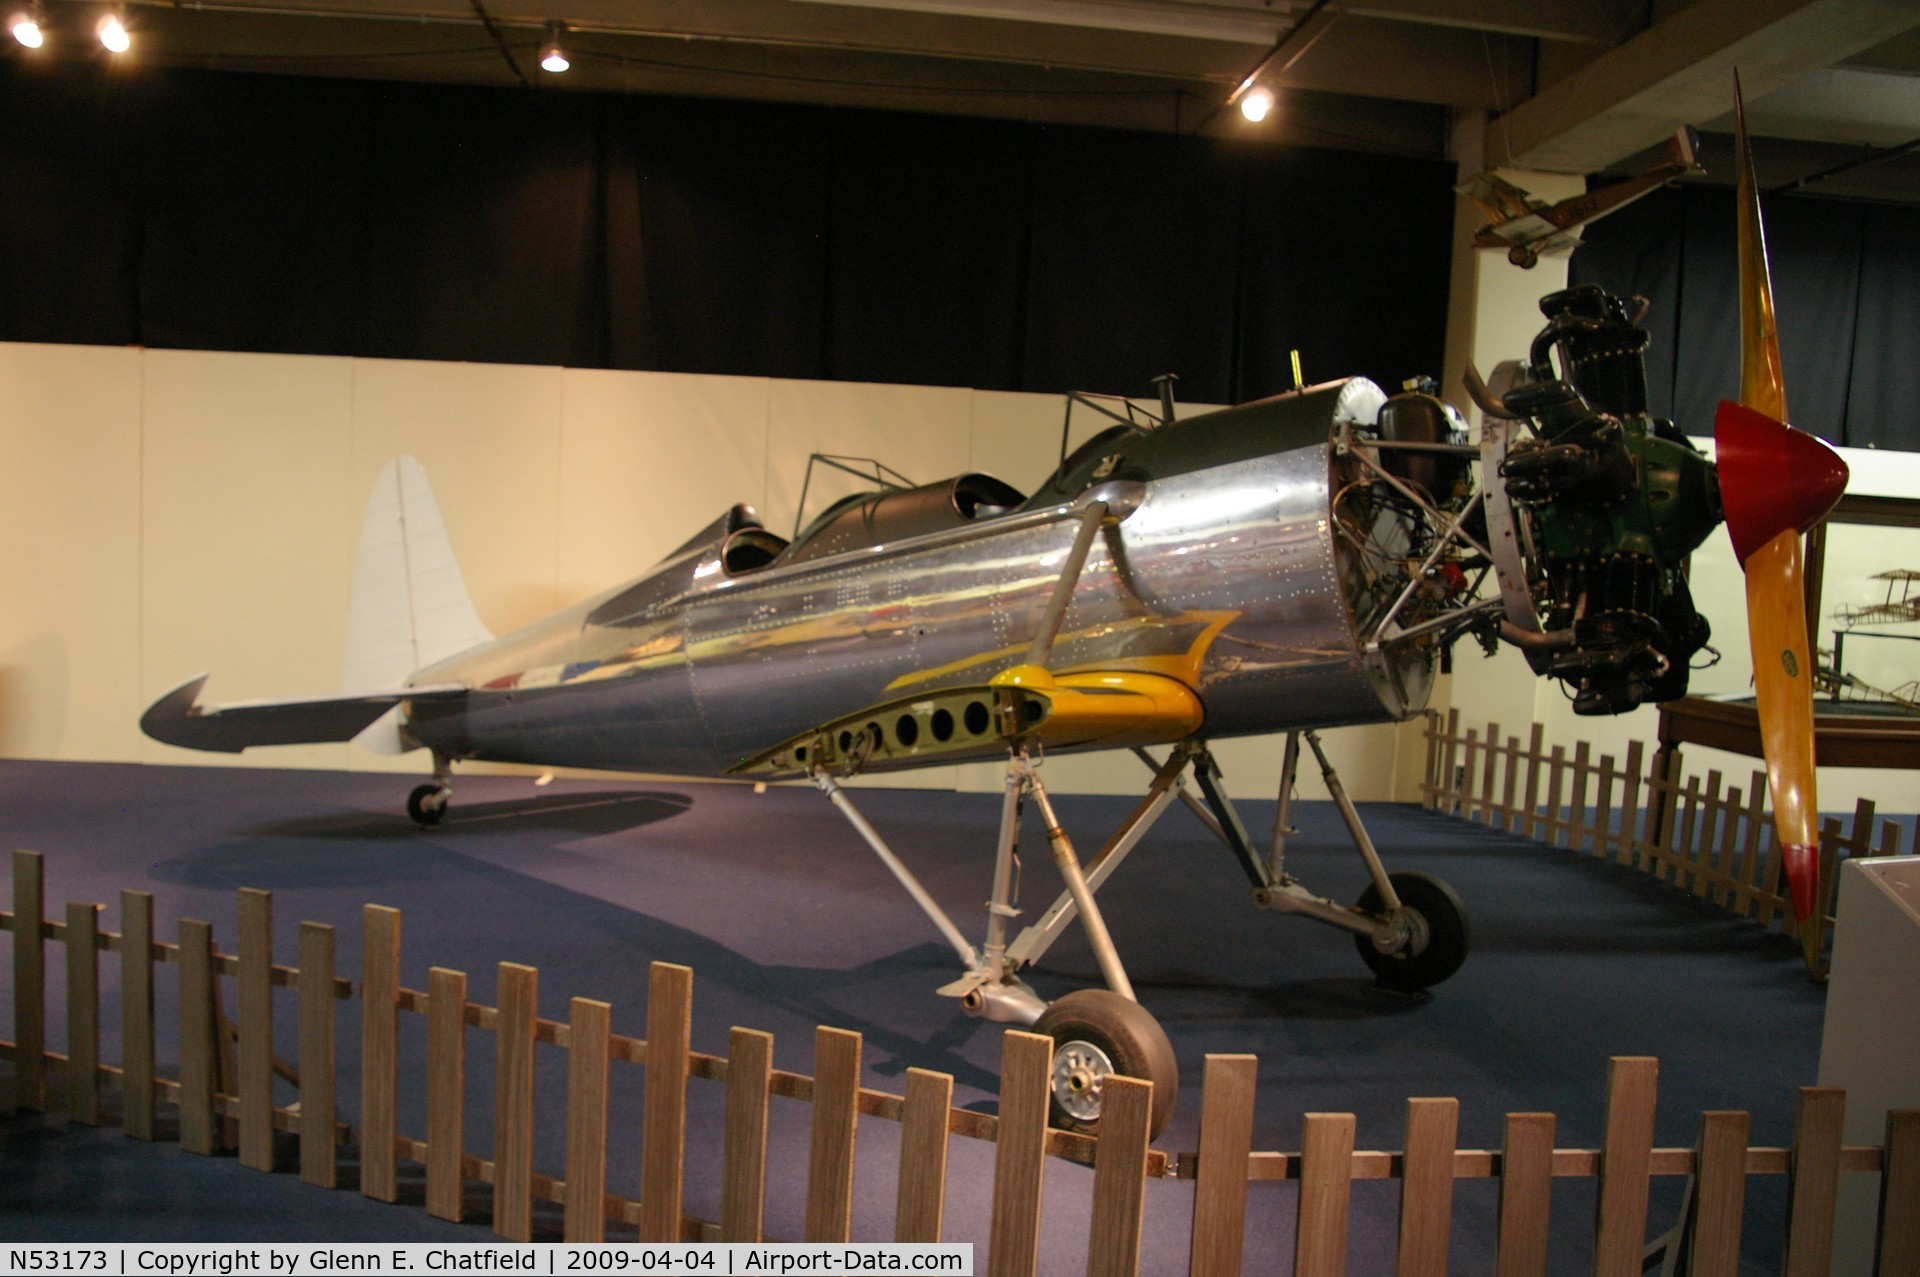 N53173, 1942 Ryan Aeronautical ST3KR C/N 2149, PT-22 41-20940 at the Science Museum of Oklahoma in Oklahoma City